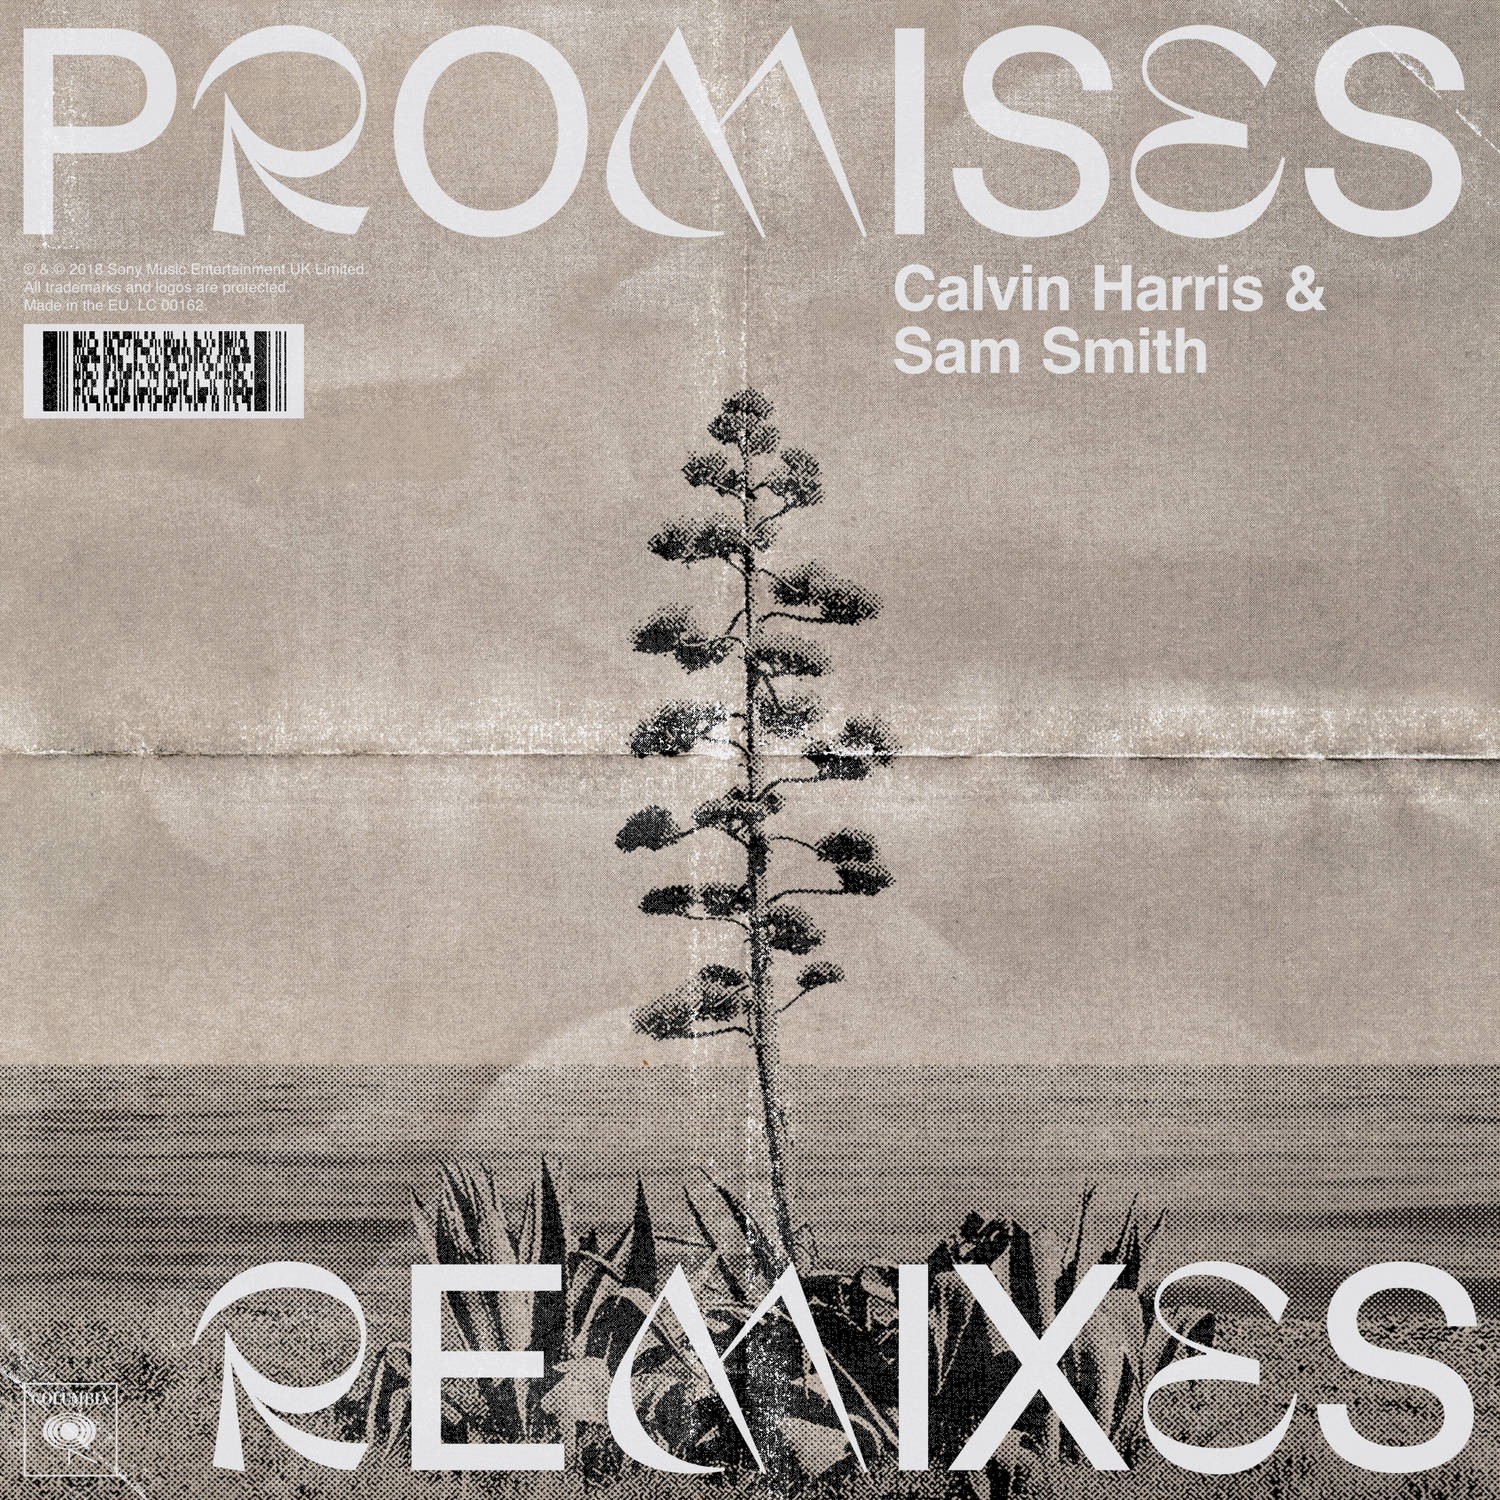 Promises (David Guetta Extended Remix)